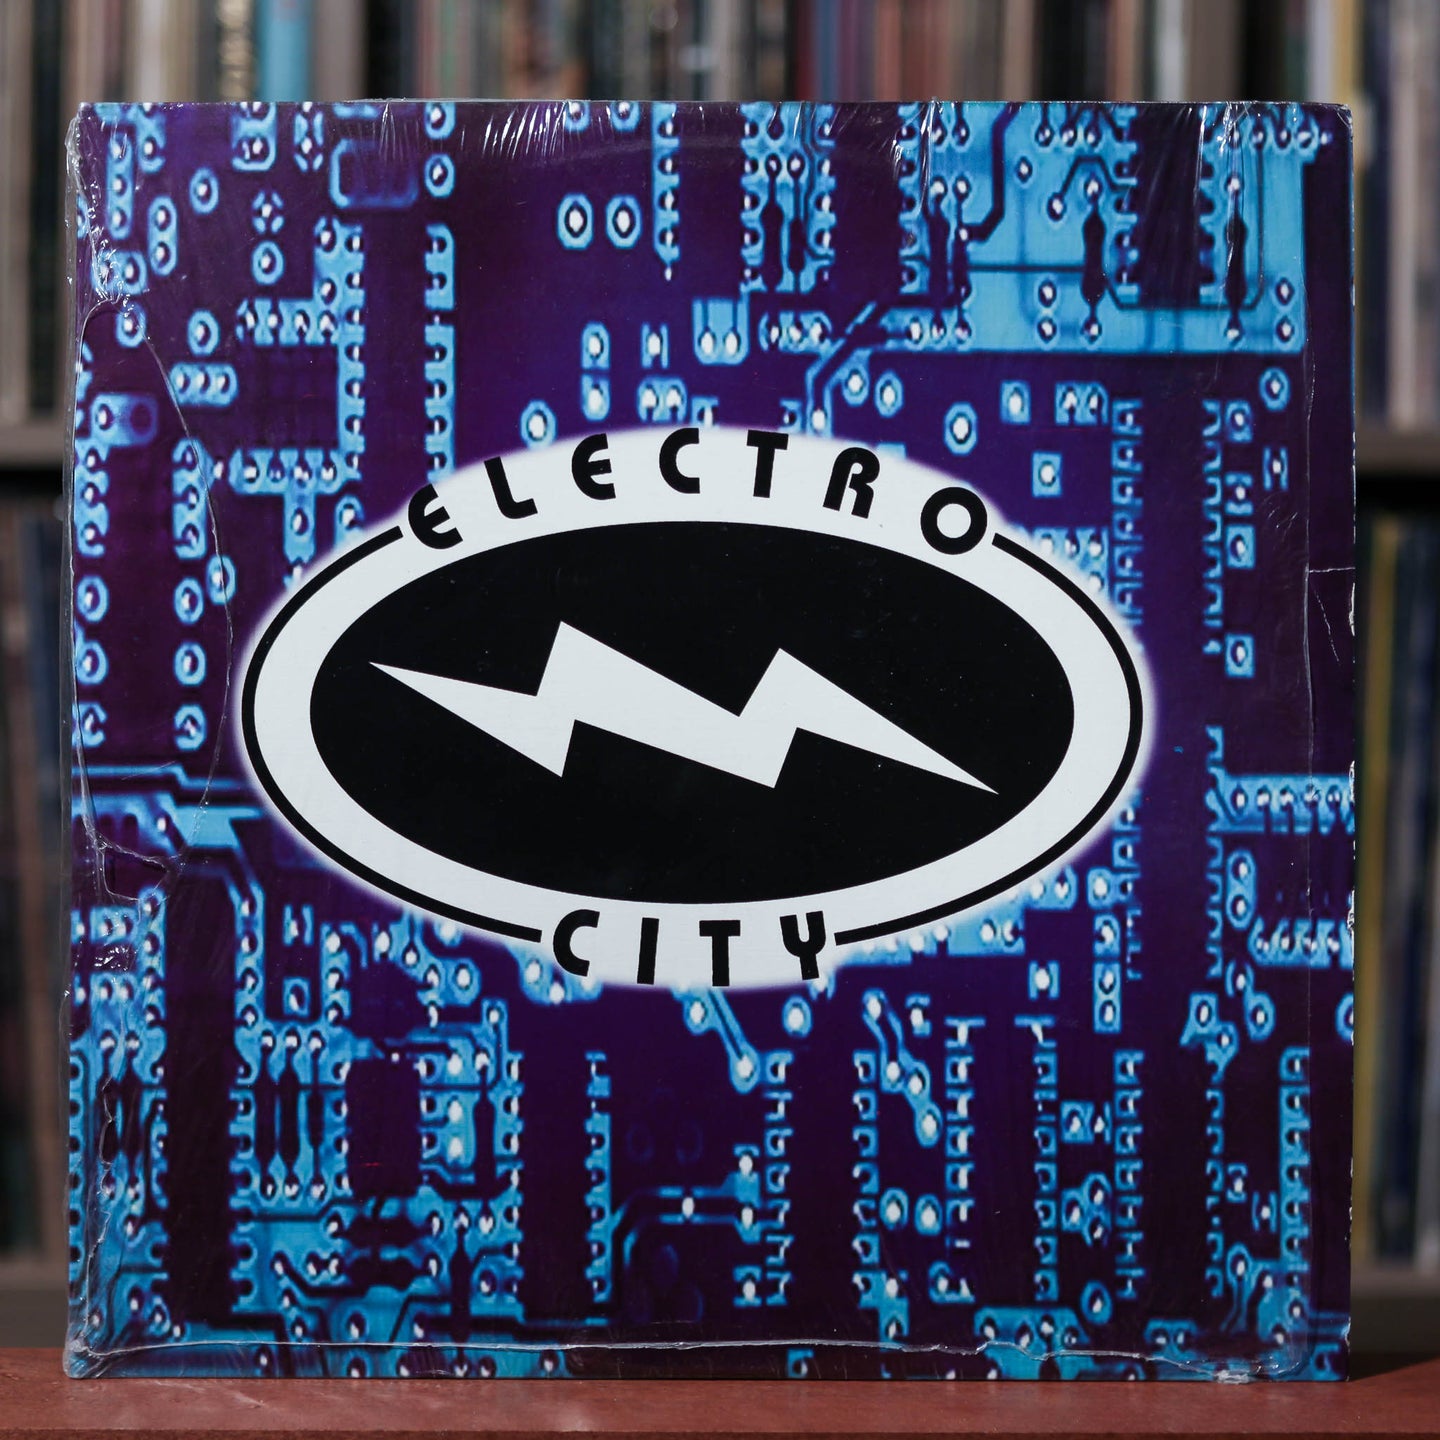 Electro City - Black Light - 1997 Splash, VG+/VG+